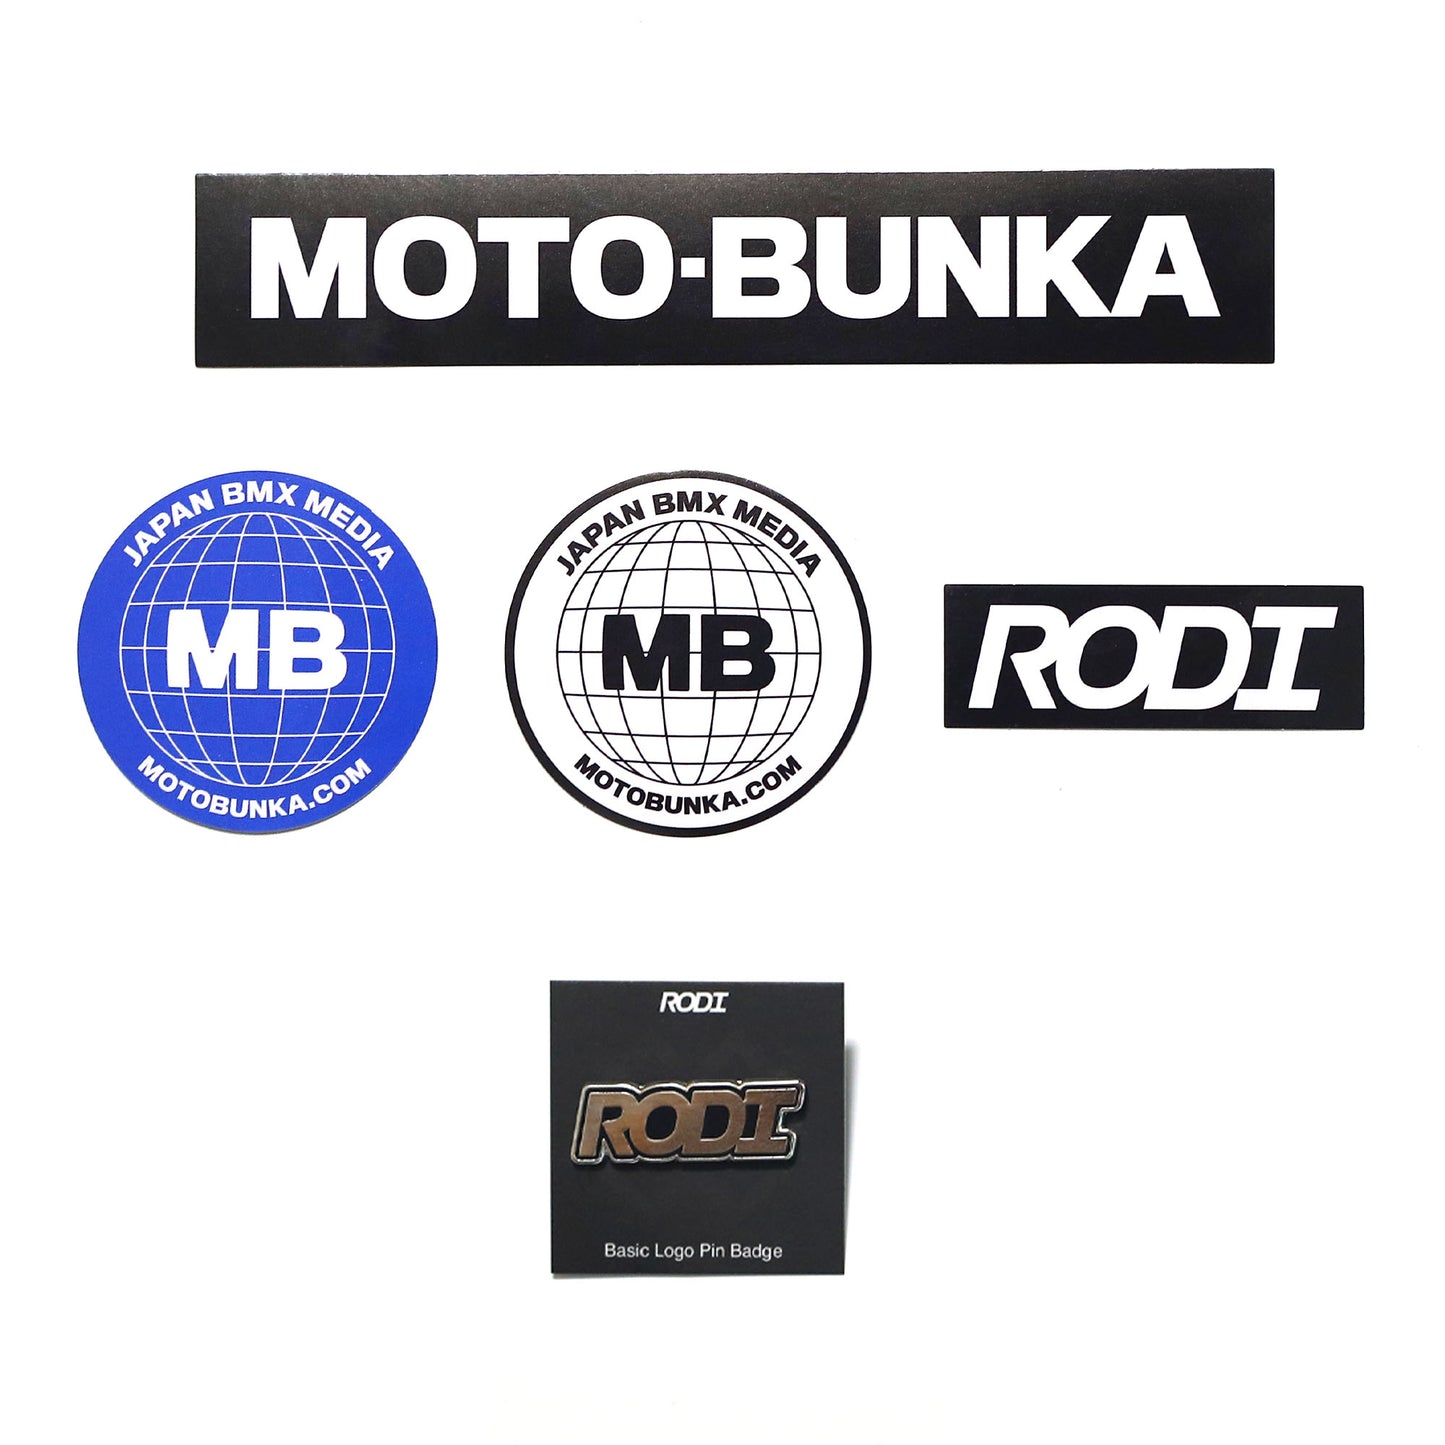 MOTO-BUNKA - Sticker & Pin Badge Set